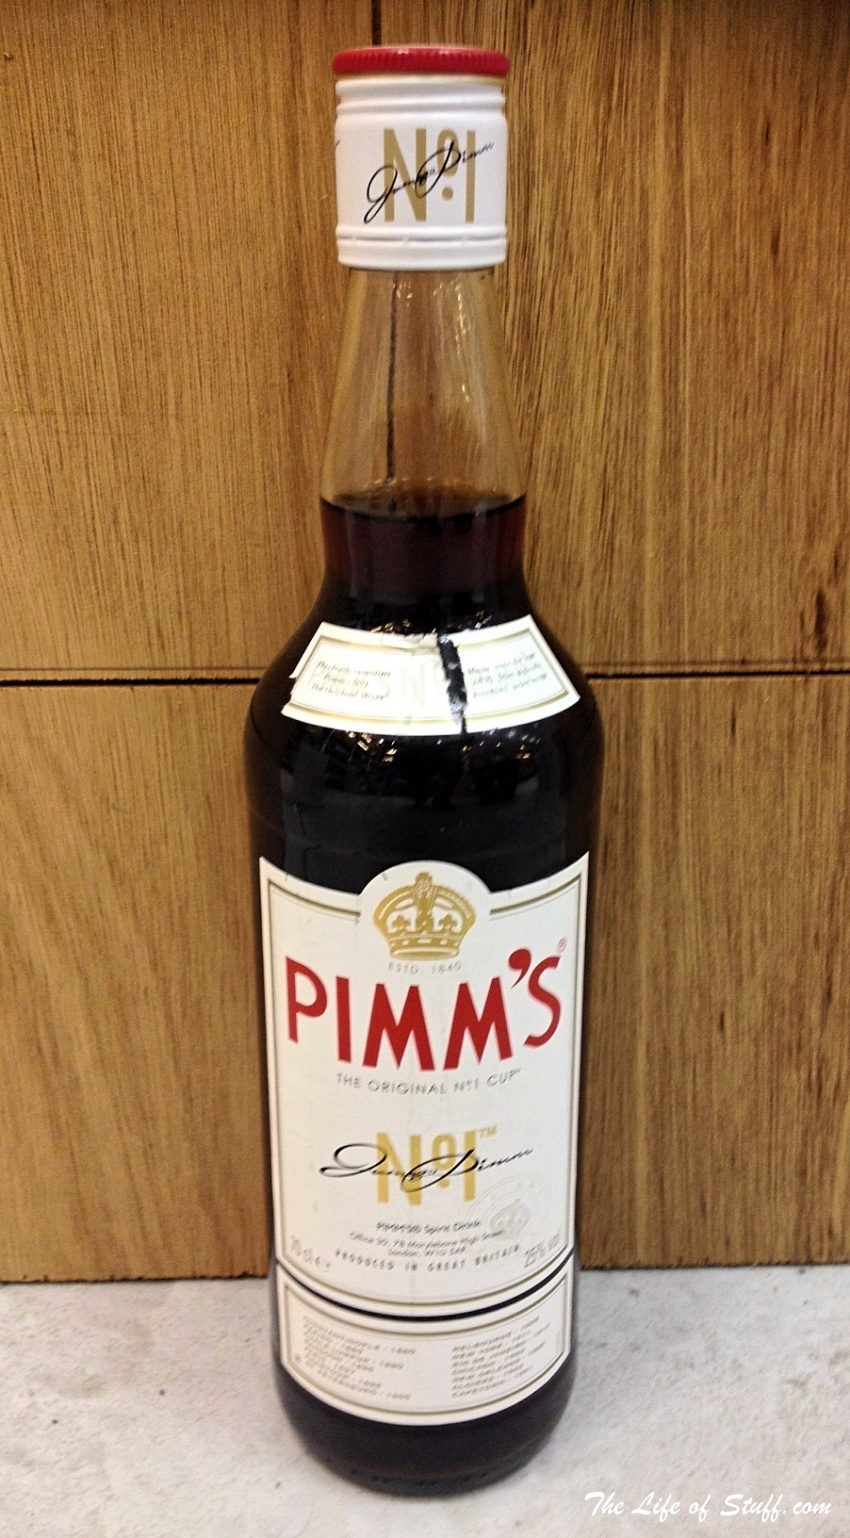 Bottle of Pimm's No. 1